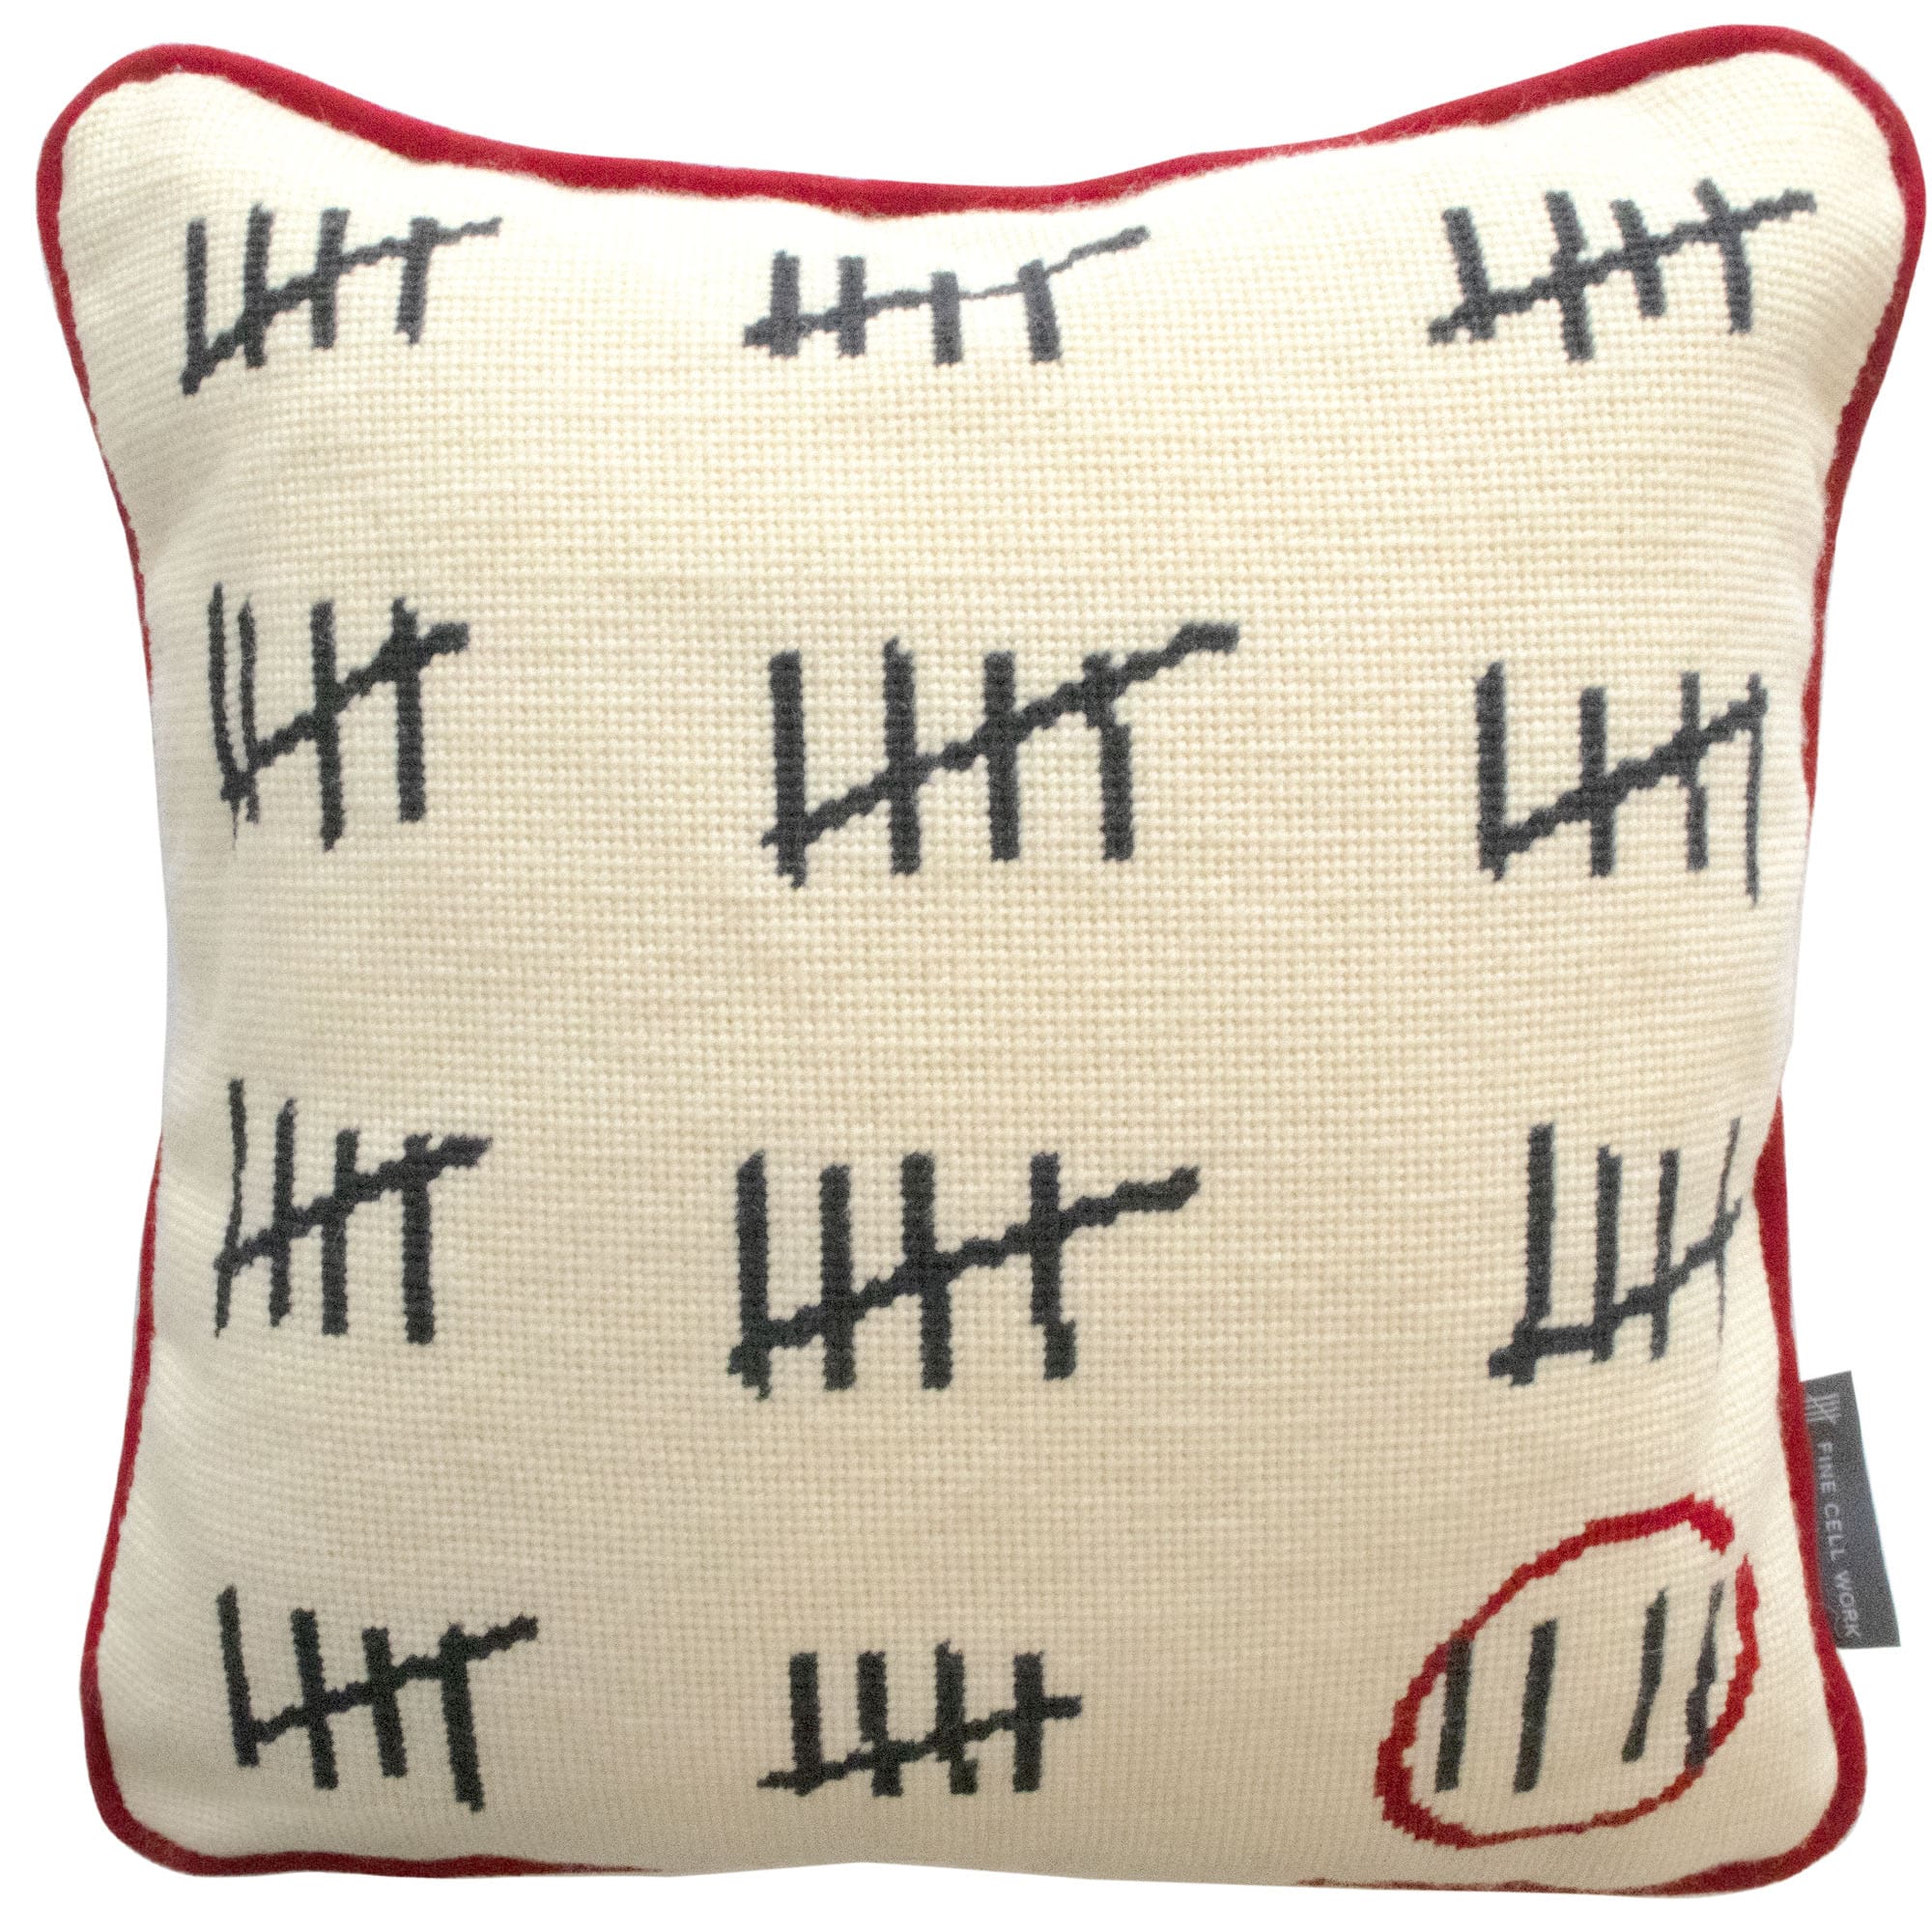 Prison Calendar Wool Needlepoint Cushion AA Gill Handmade in Prison Red Cream Black